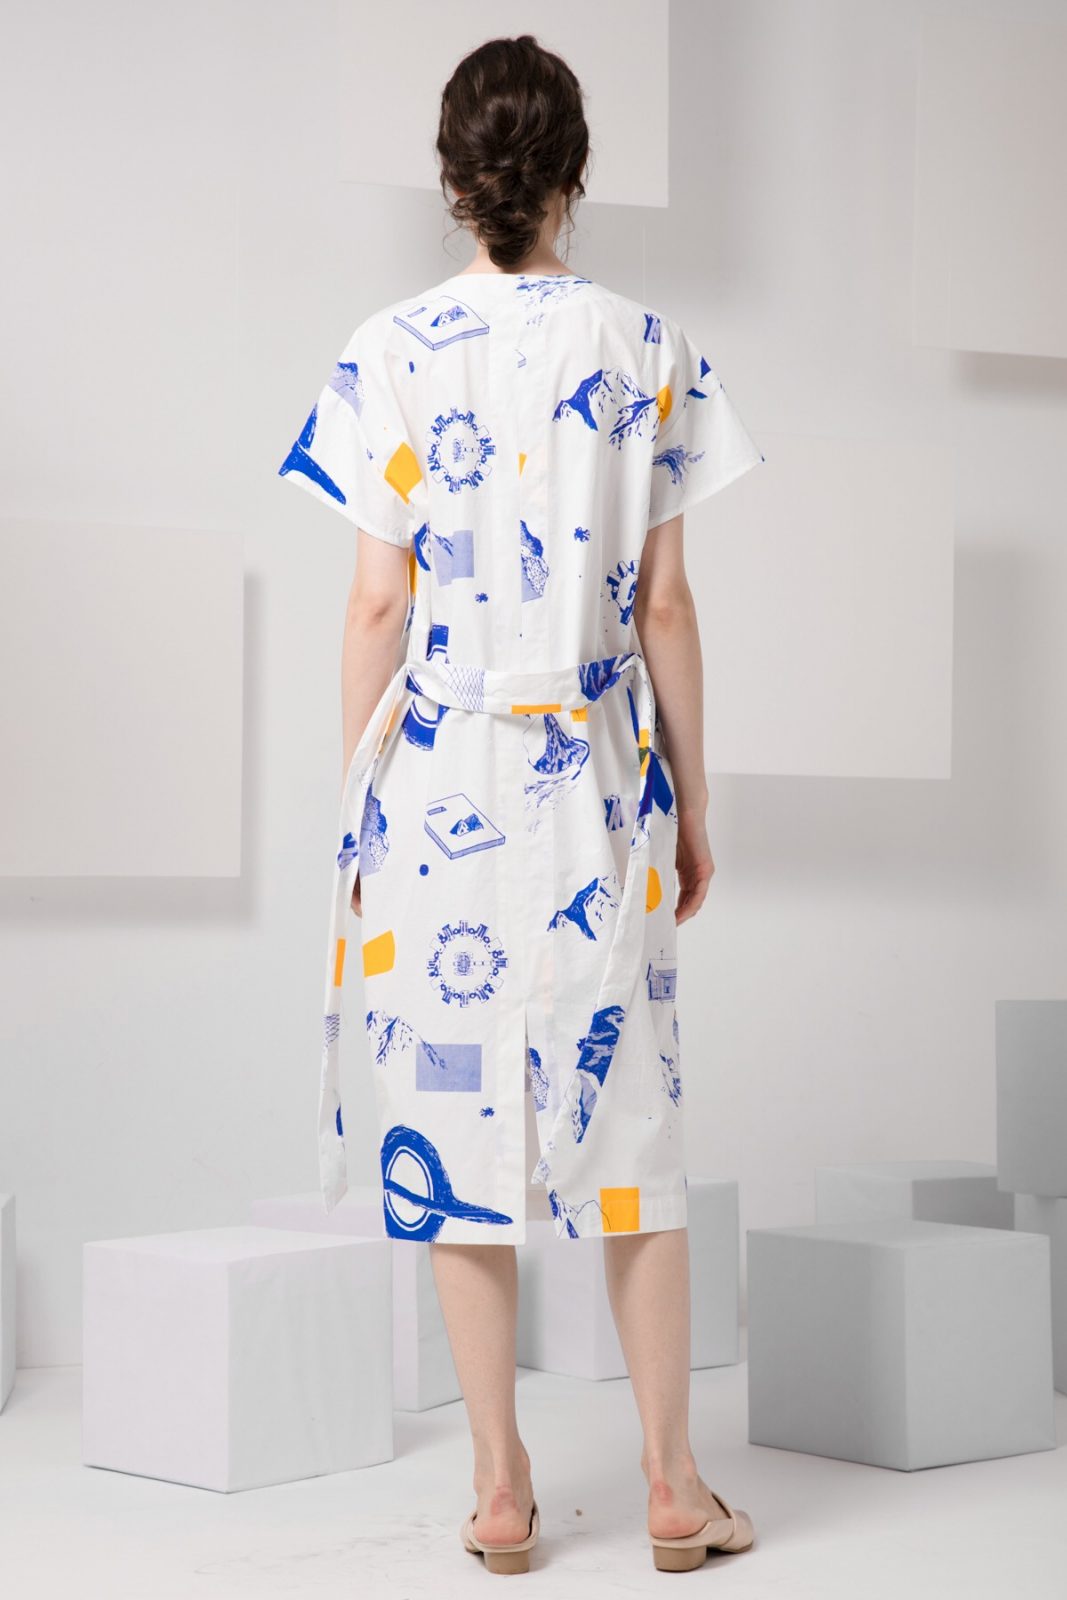 SKYE modern minimalist women clothing fashion Lois Dress interstellar 5